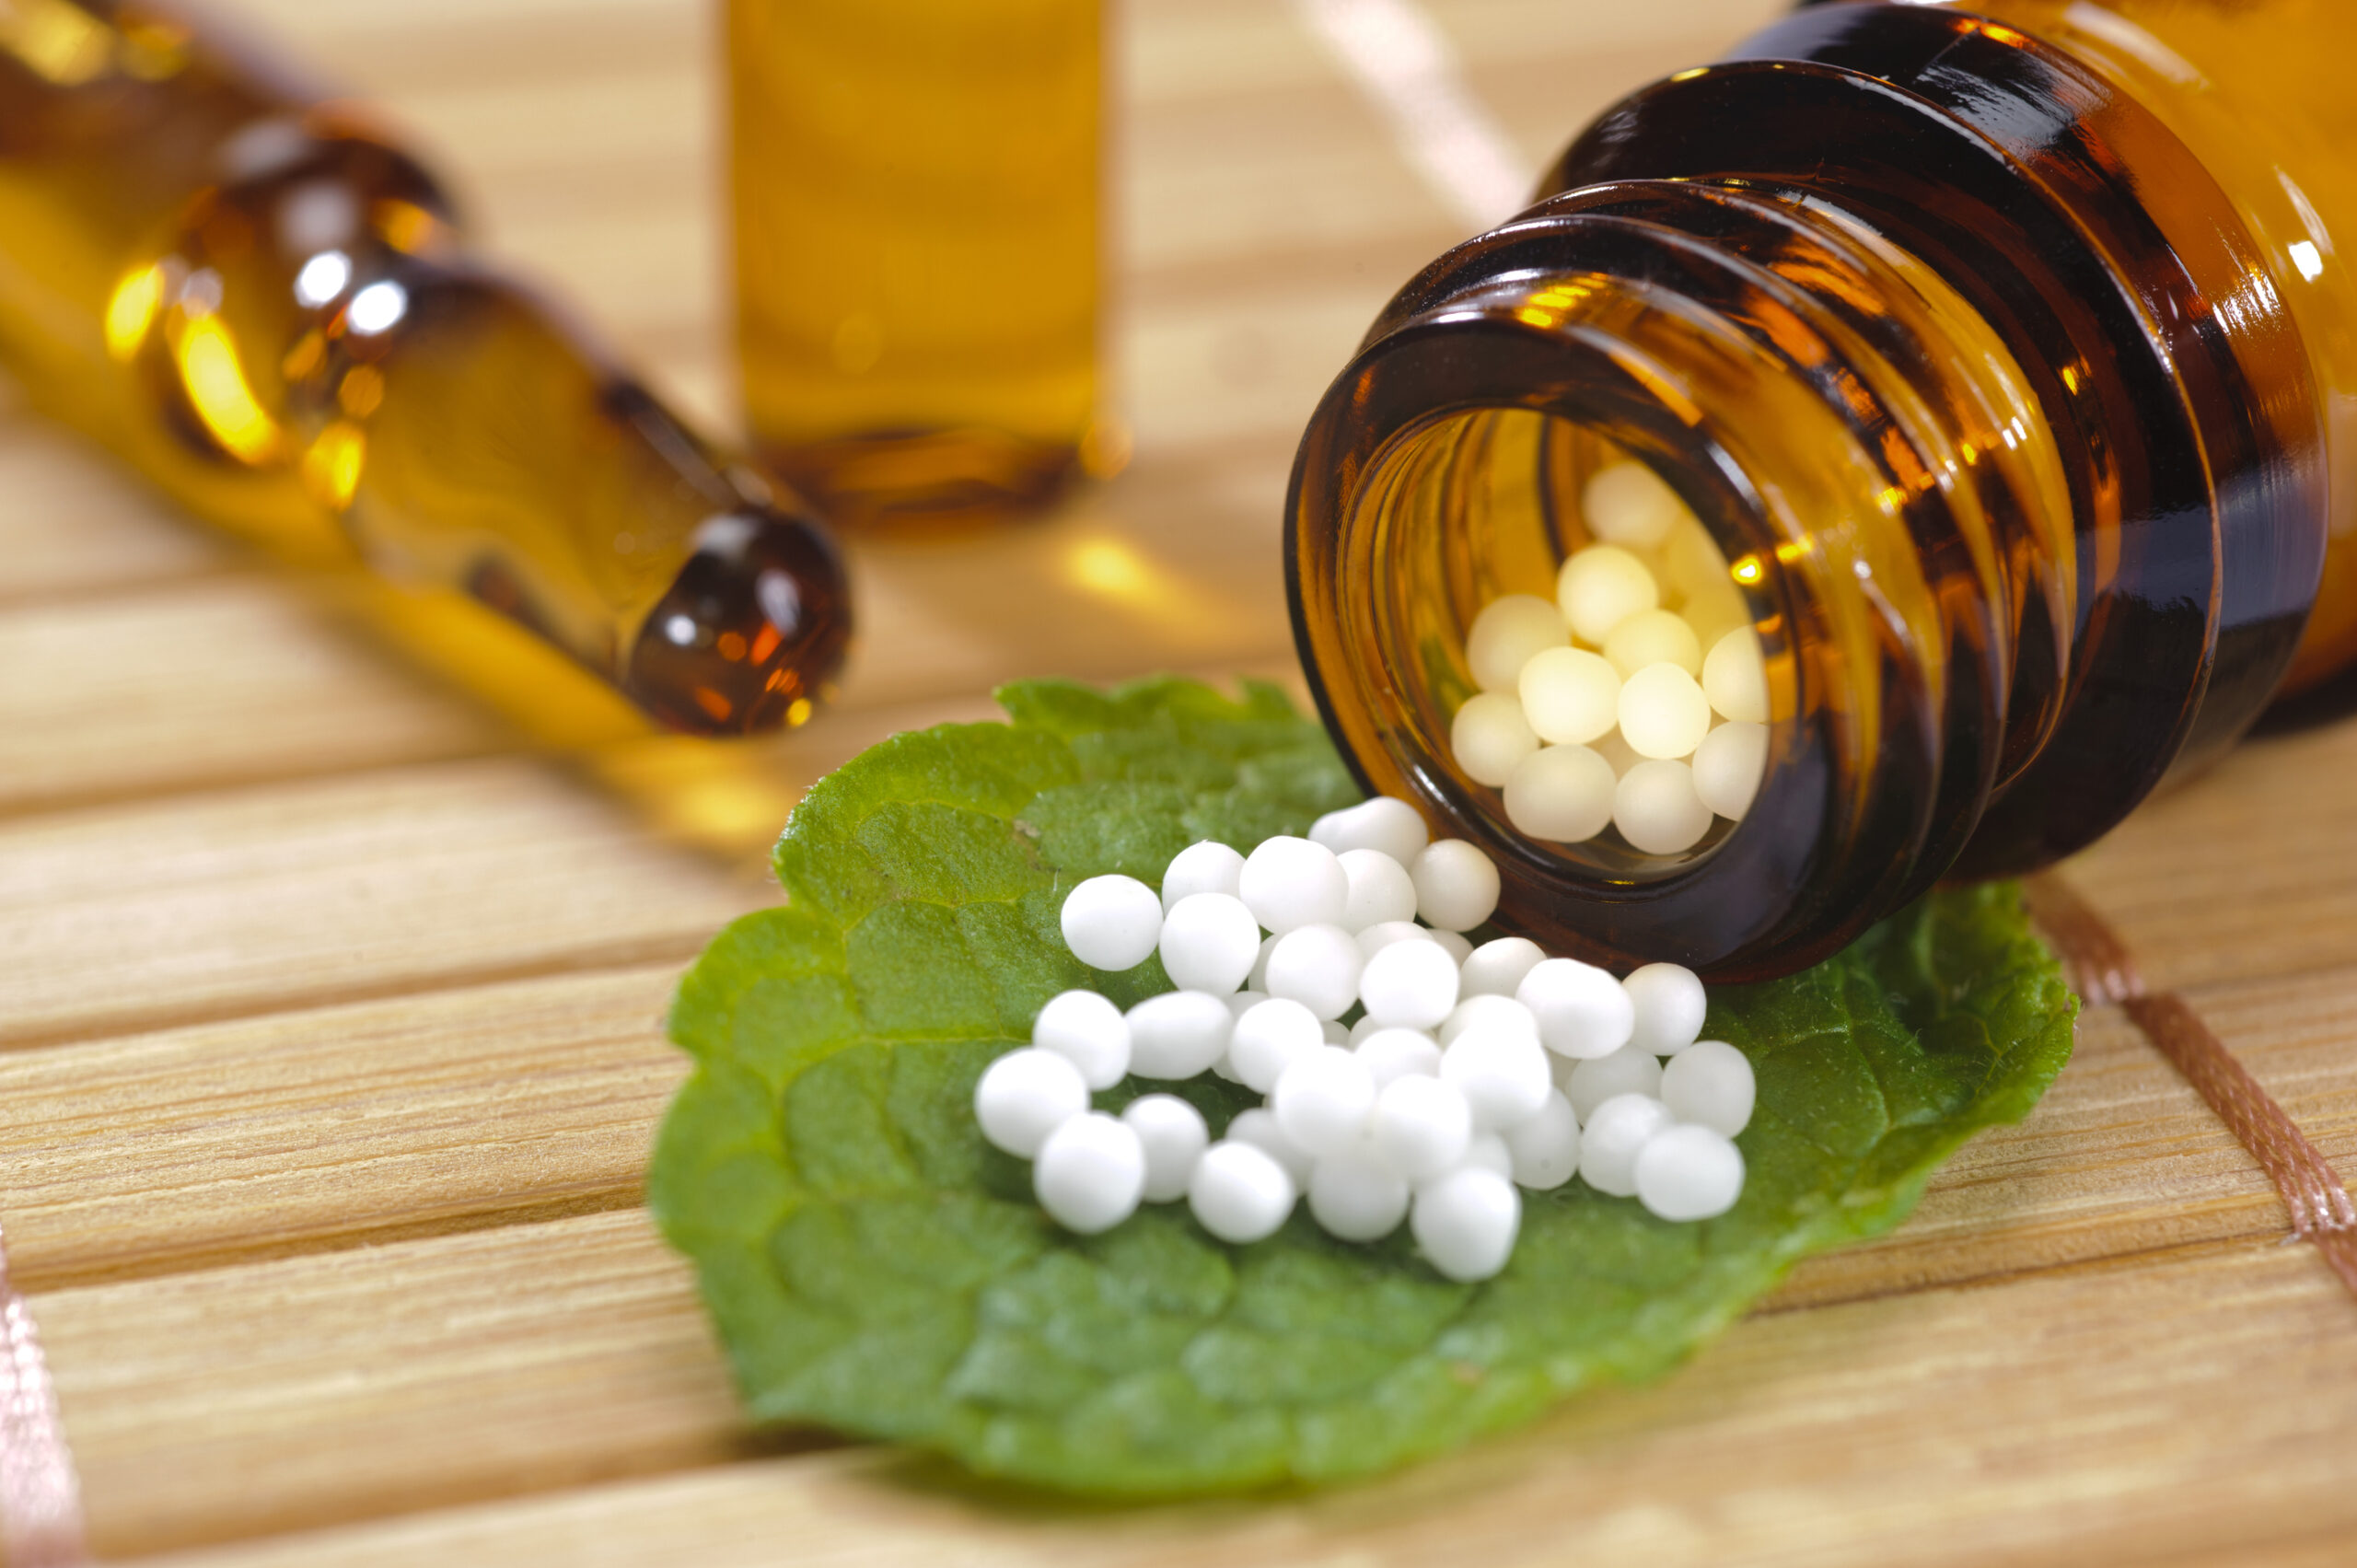 Homeopathy for natural healing